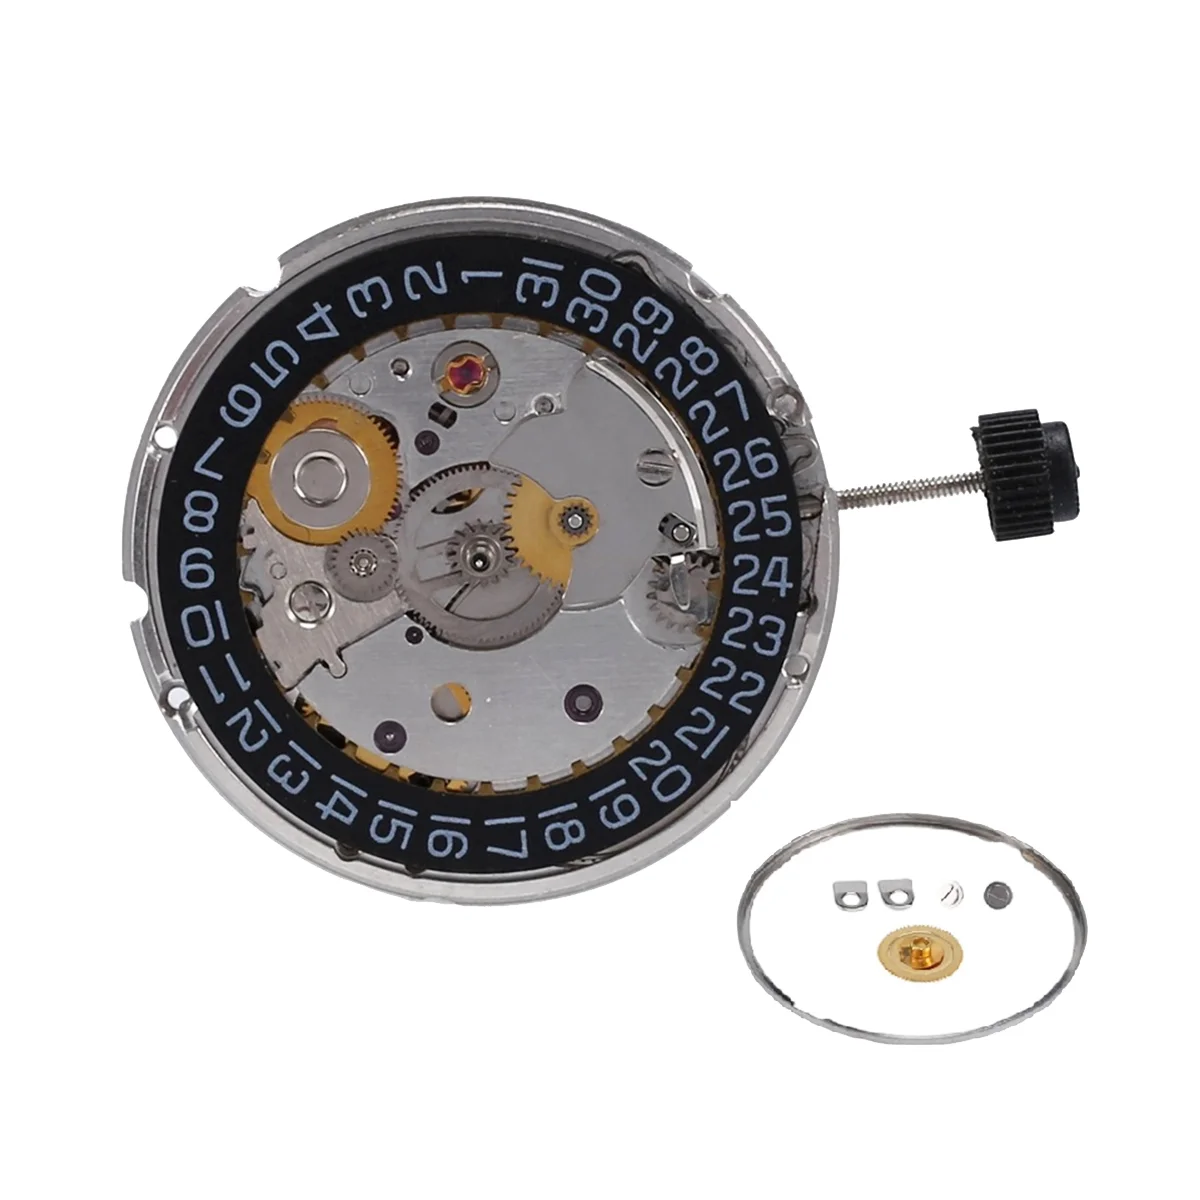 

2824-2 Watch Movement Automatic Mechanical Movement Engraved Fish Pattern Watch Accessories Black Calendar